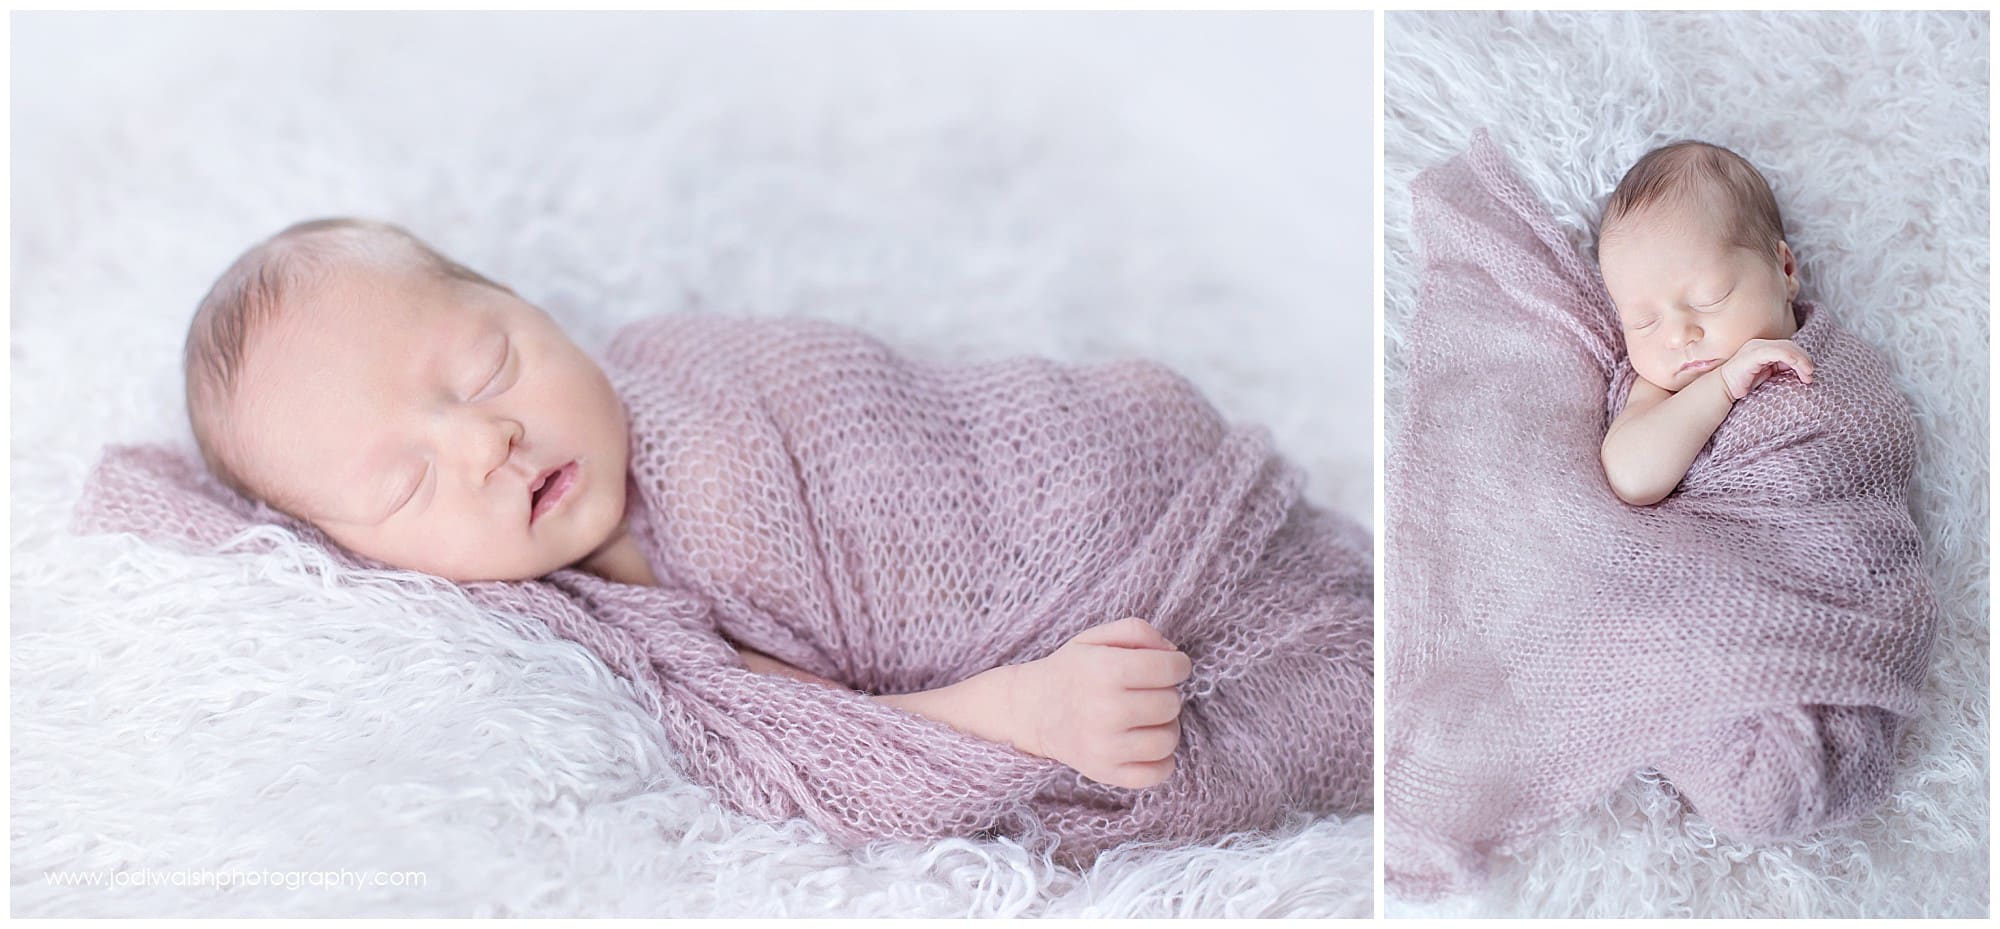 sleeping newborn baby girl in pink wrap on white fur